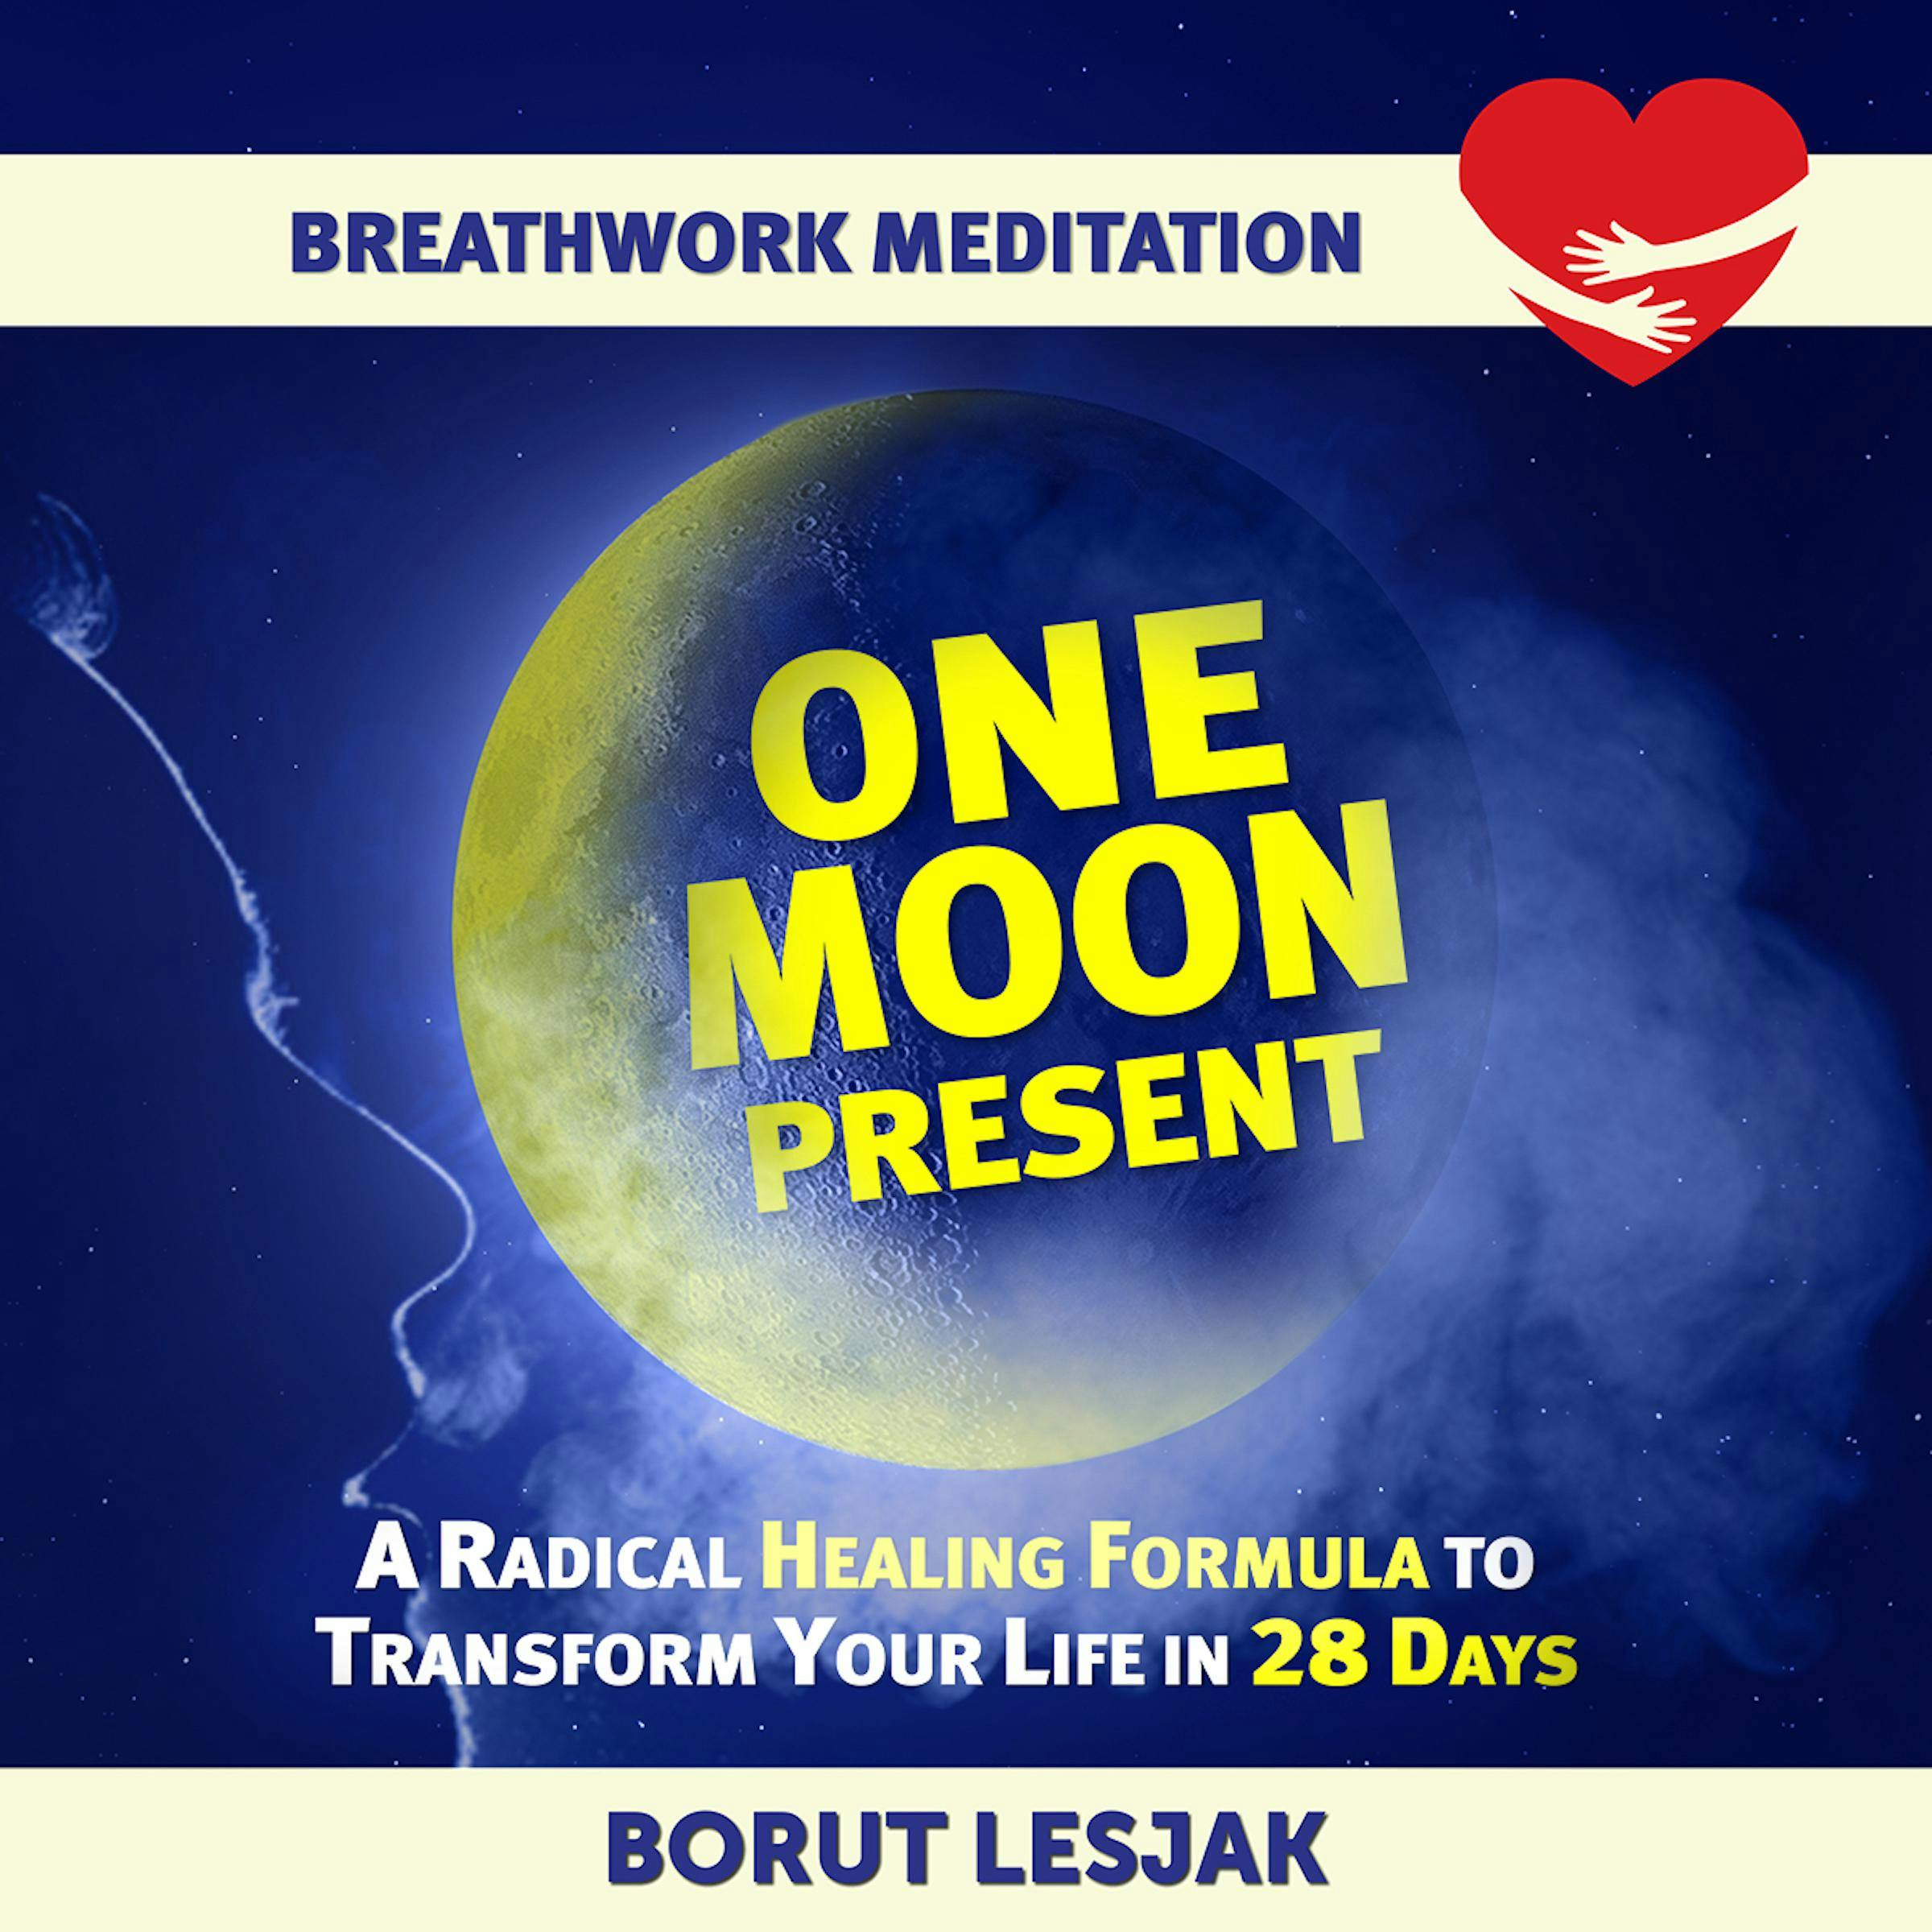 One Moon Present Breathwork Meditation: A Radical Healing Formula to Transform Your Life in 28 Days - Borut Lesjak